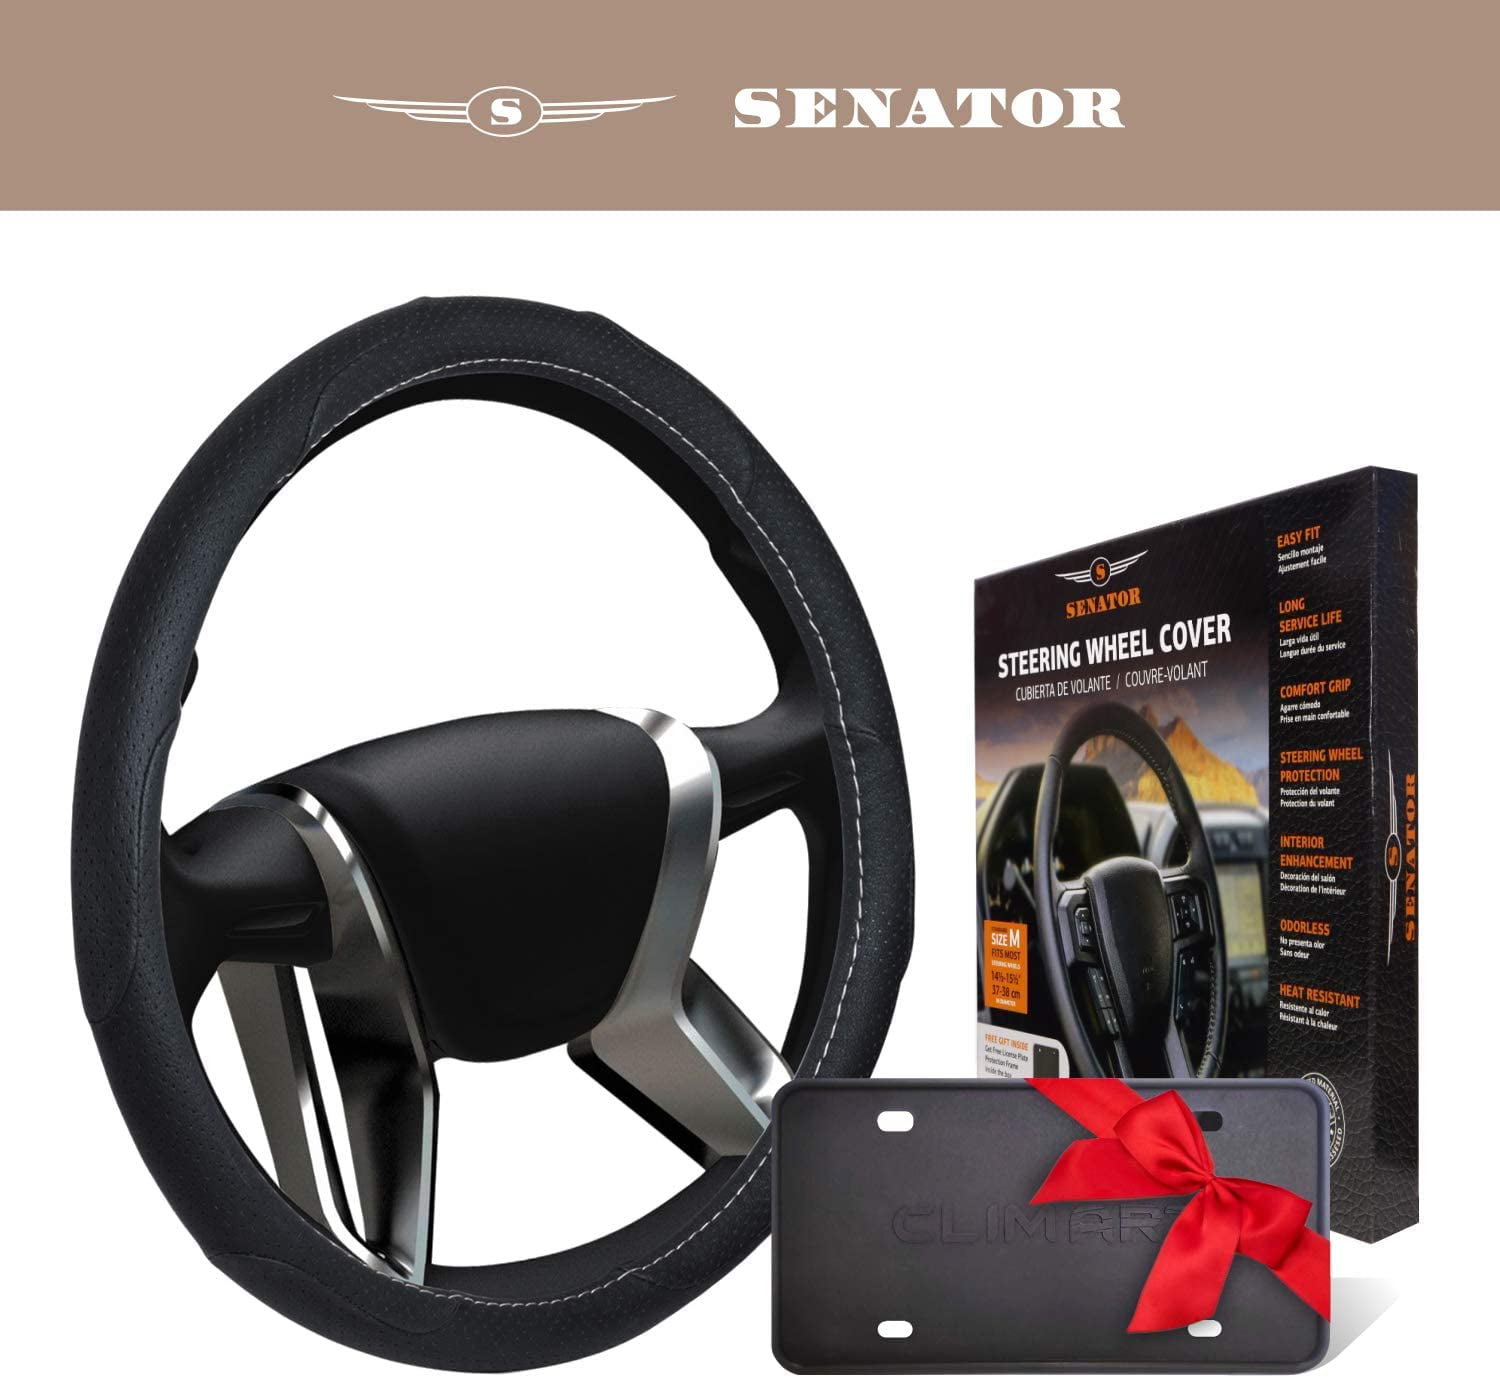 BINSHEO Automative Car Steering Wheel Cover 15 inch Comfort Durability Safety Anti-Slip,Black 